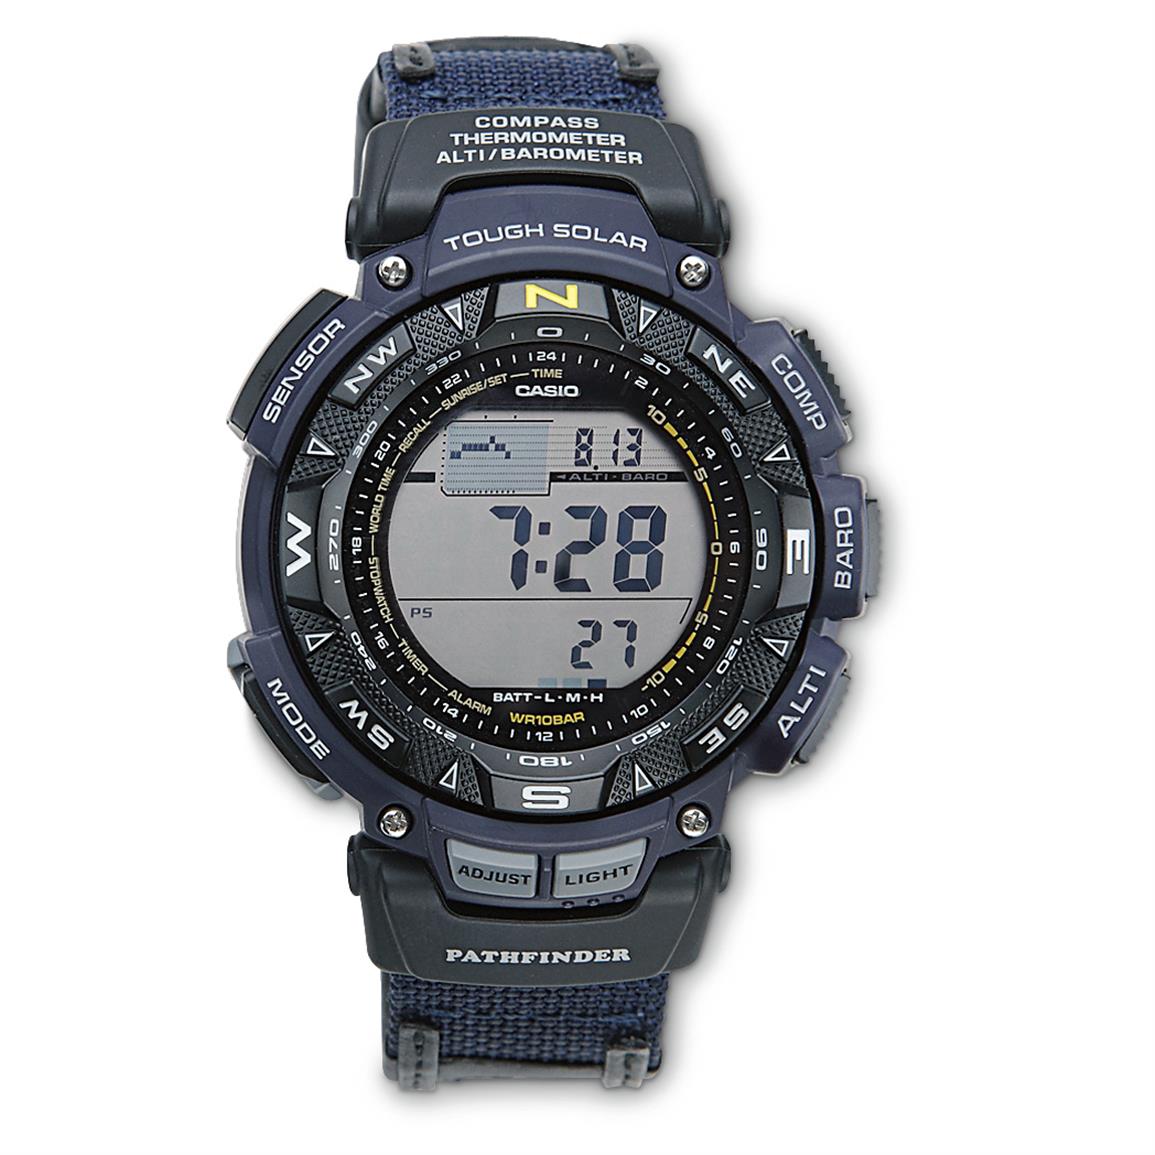 Casio Protrek Triple Sensor Solar Watch - 615545, Watches at Sportsman